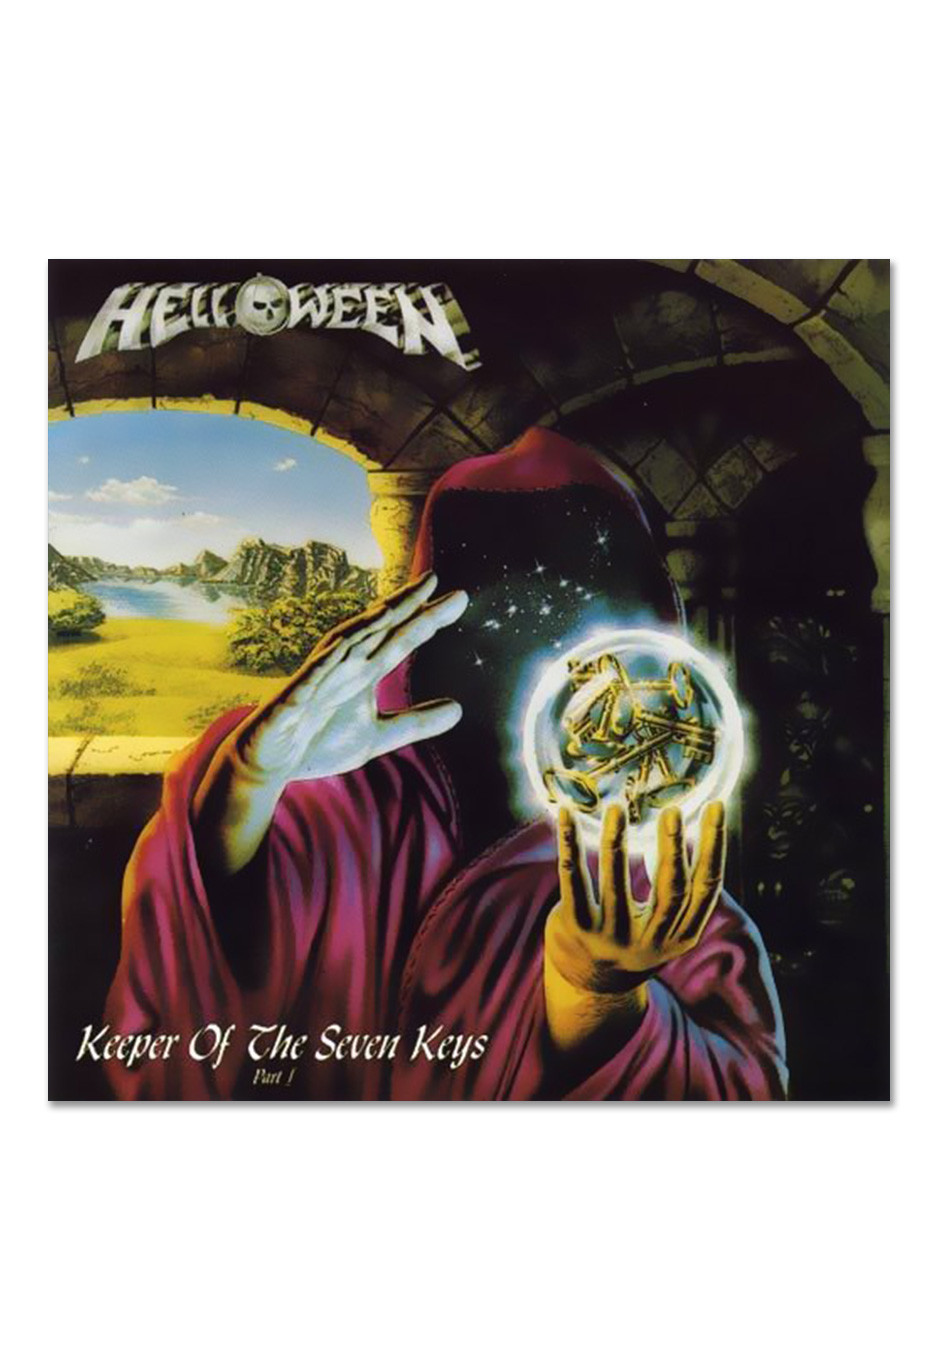 Helloween - Keeper of the Seven Keys Pt.1 Blue - Vinyl